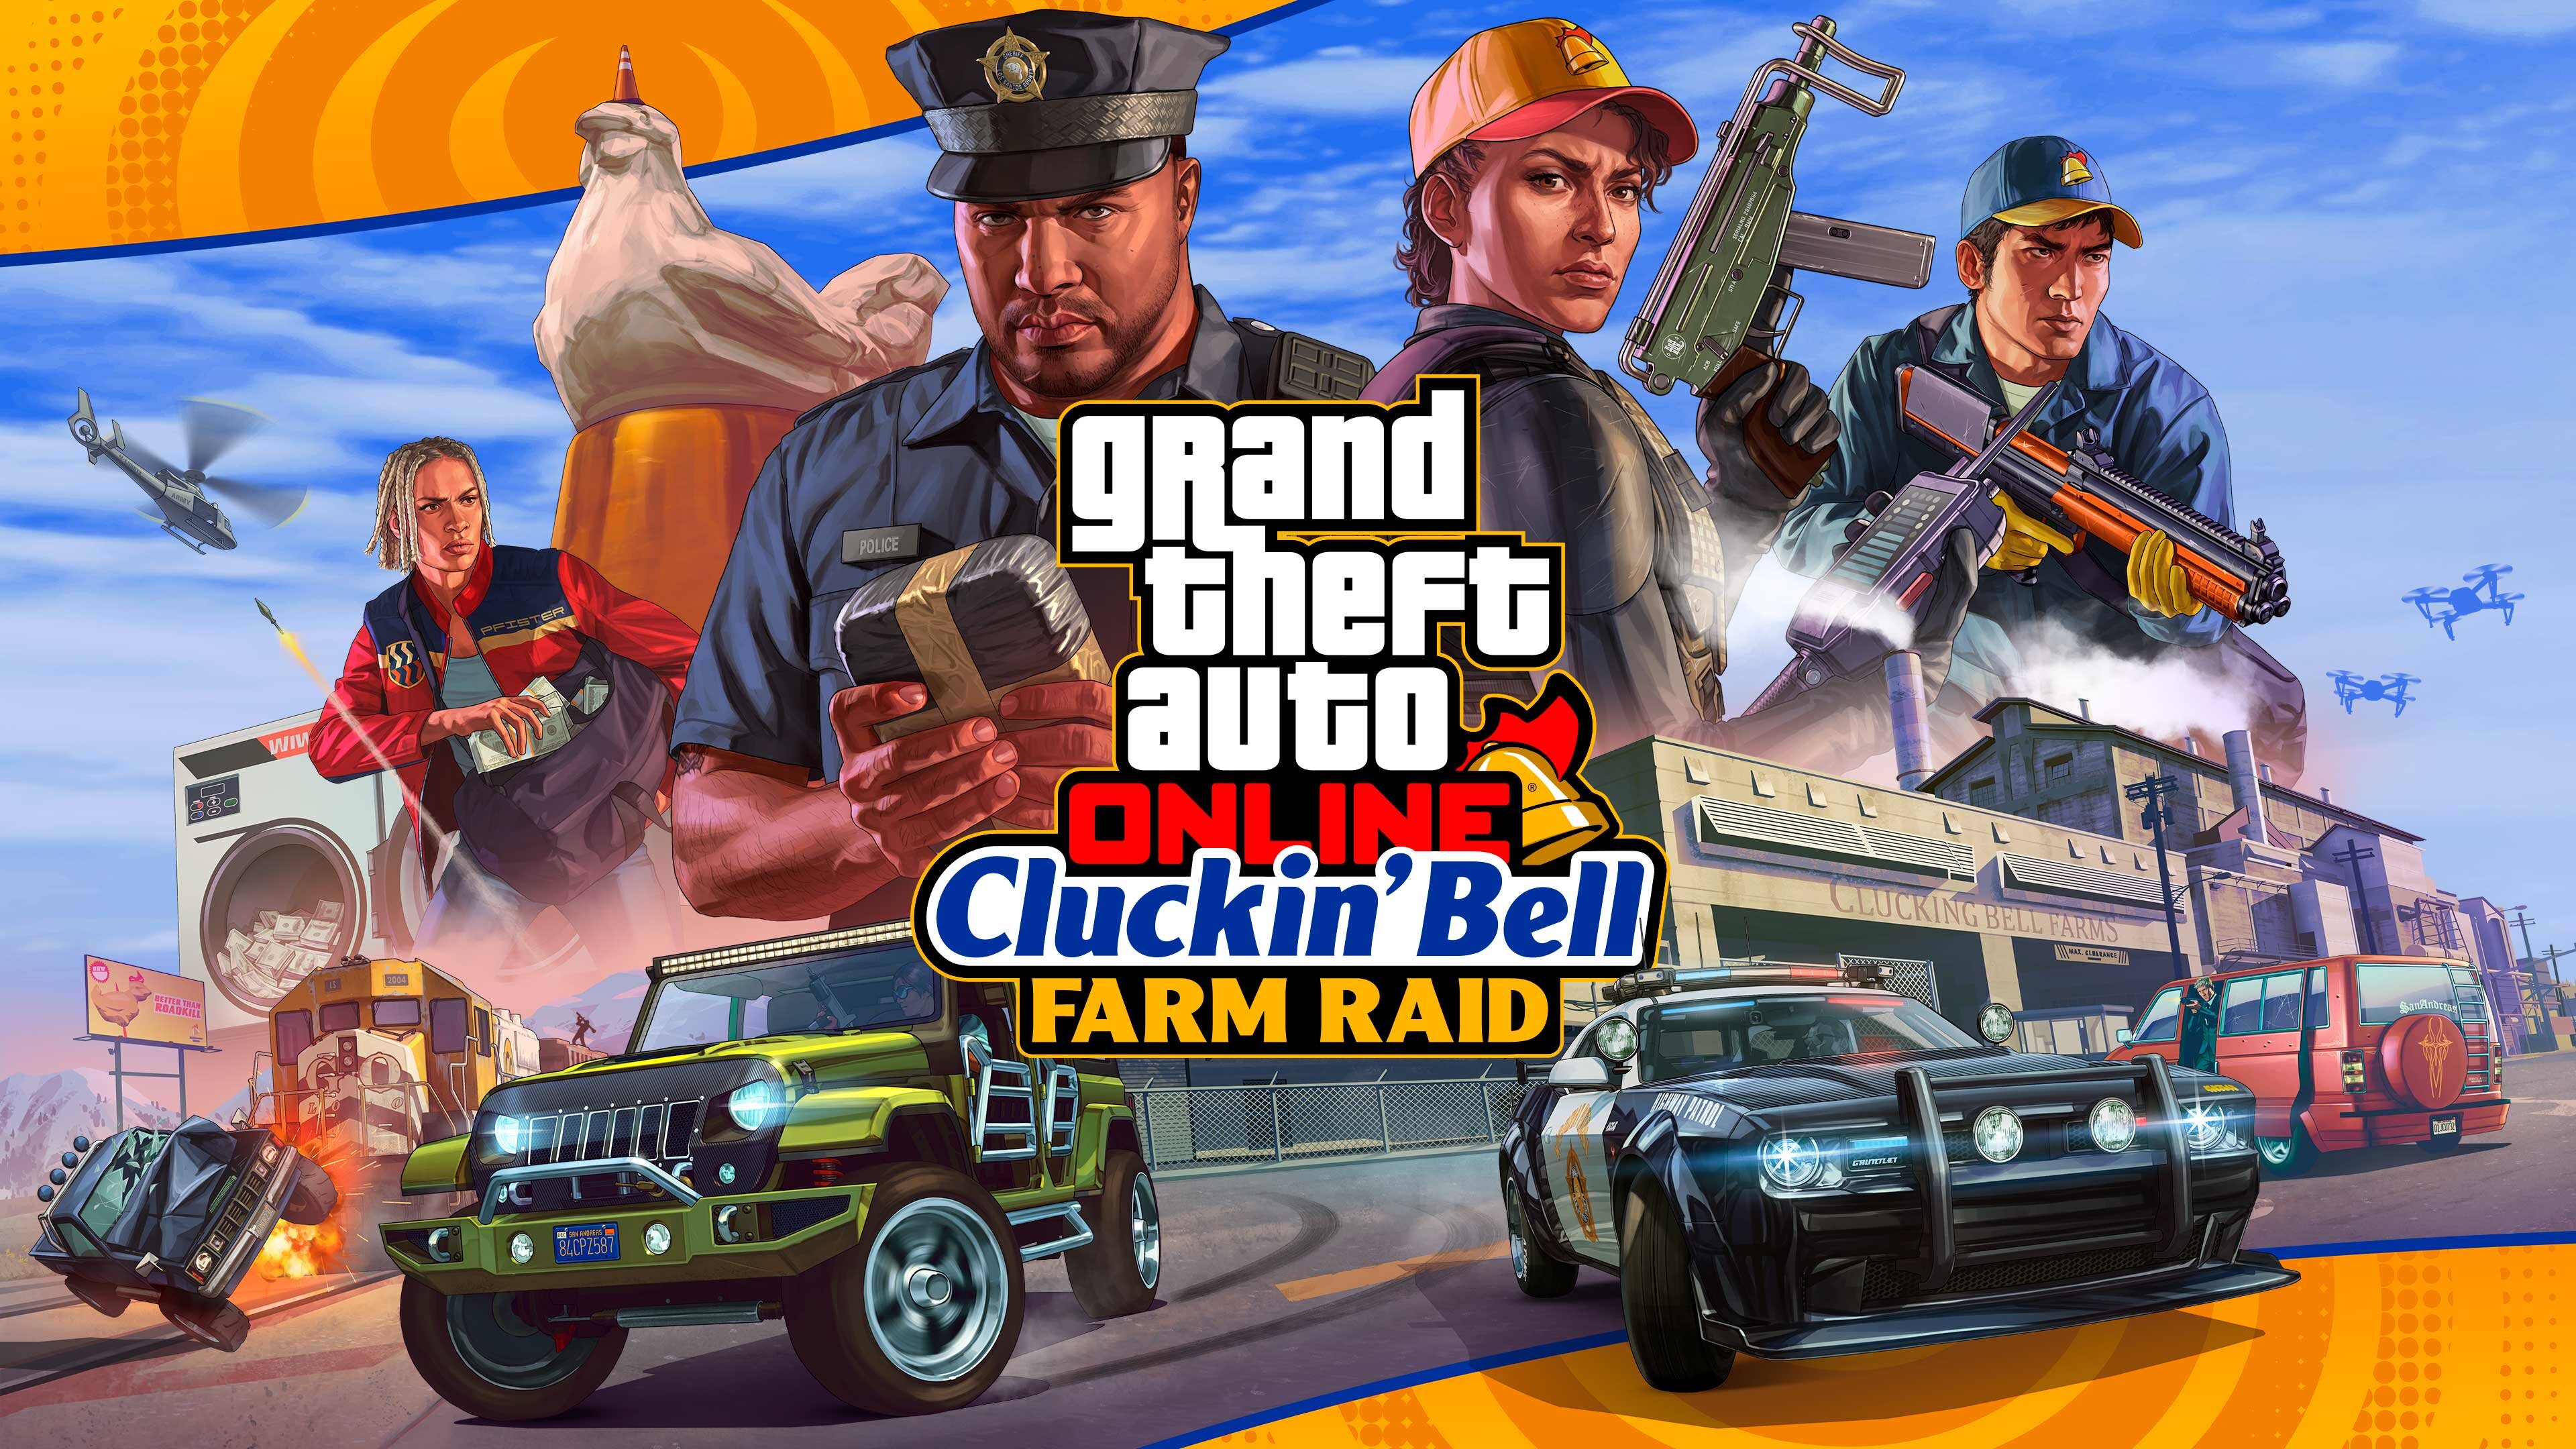 More information about "The Cluckin’ Bell Farm Raid is speelbaar op GTA Online"